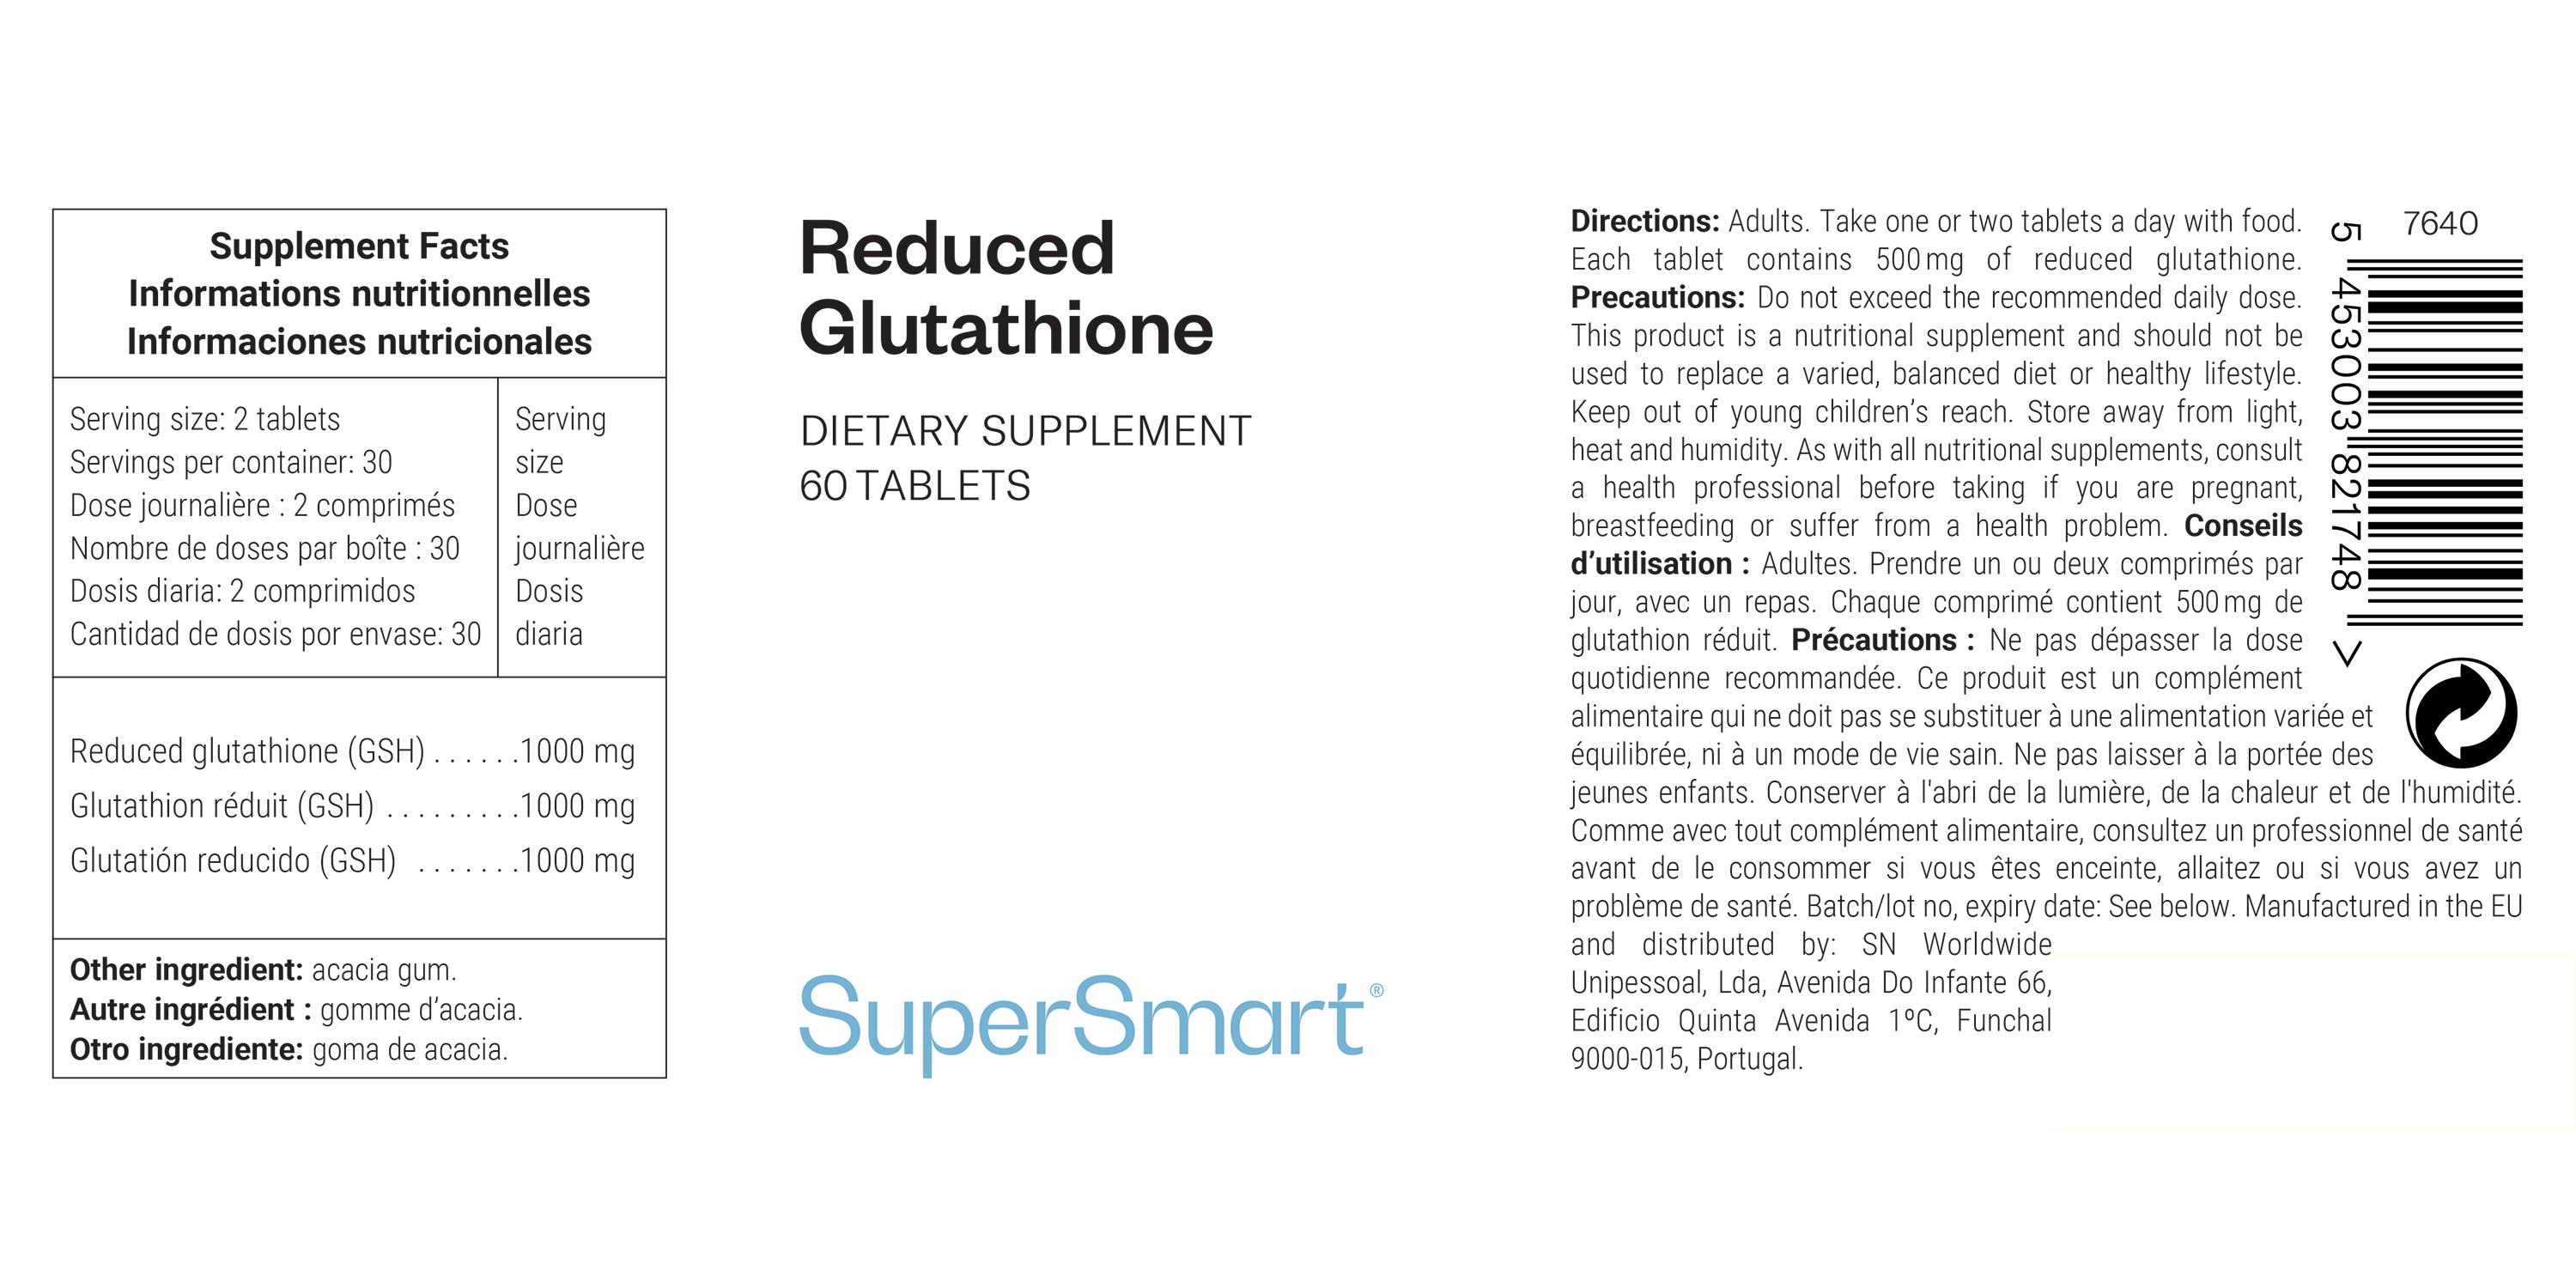 Reduced Glutathione antioxidant dietary supplement